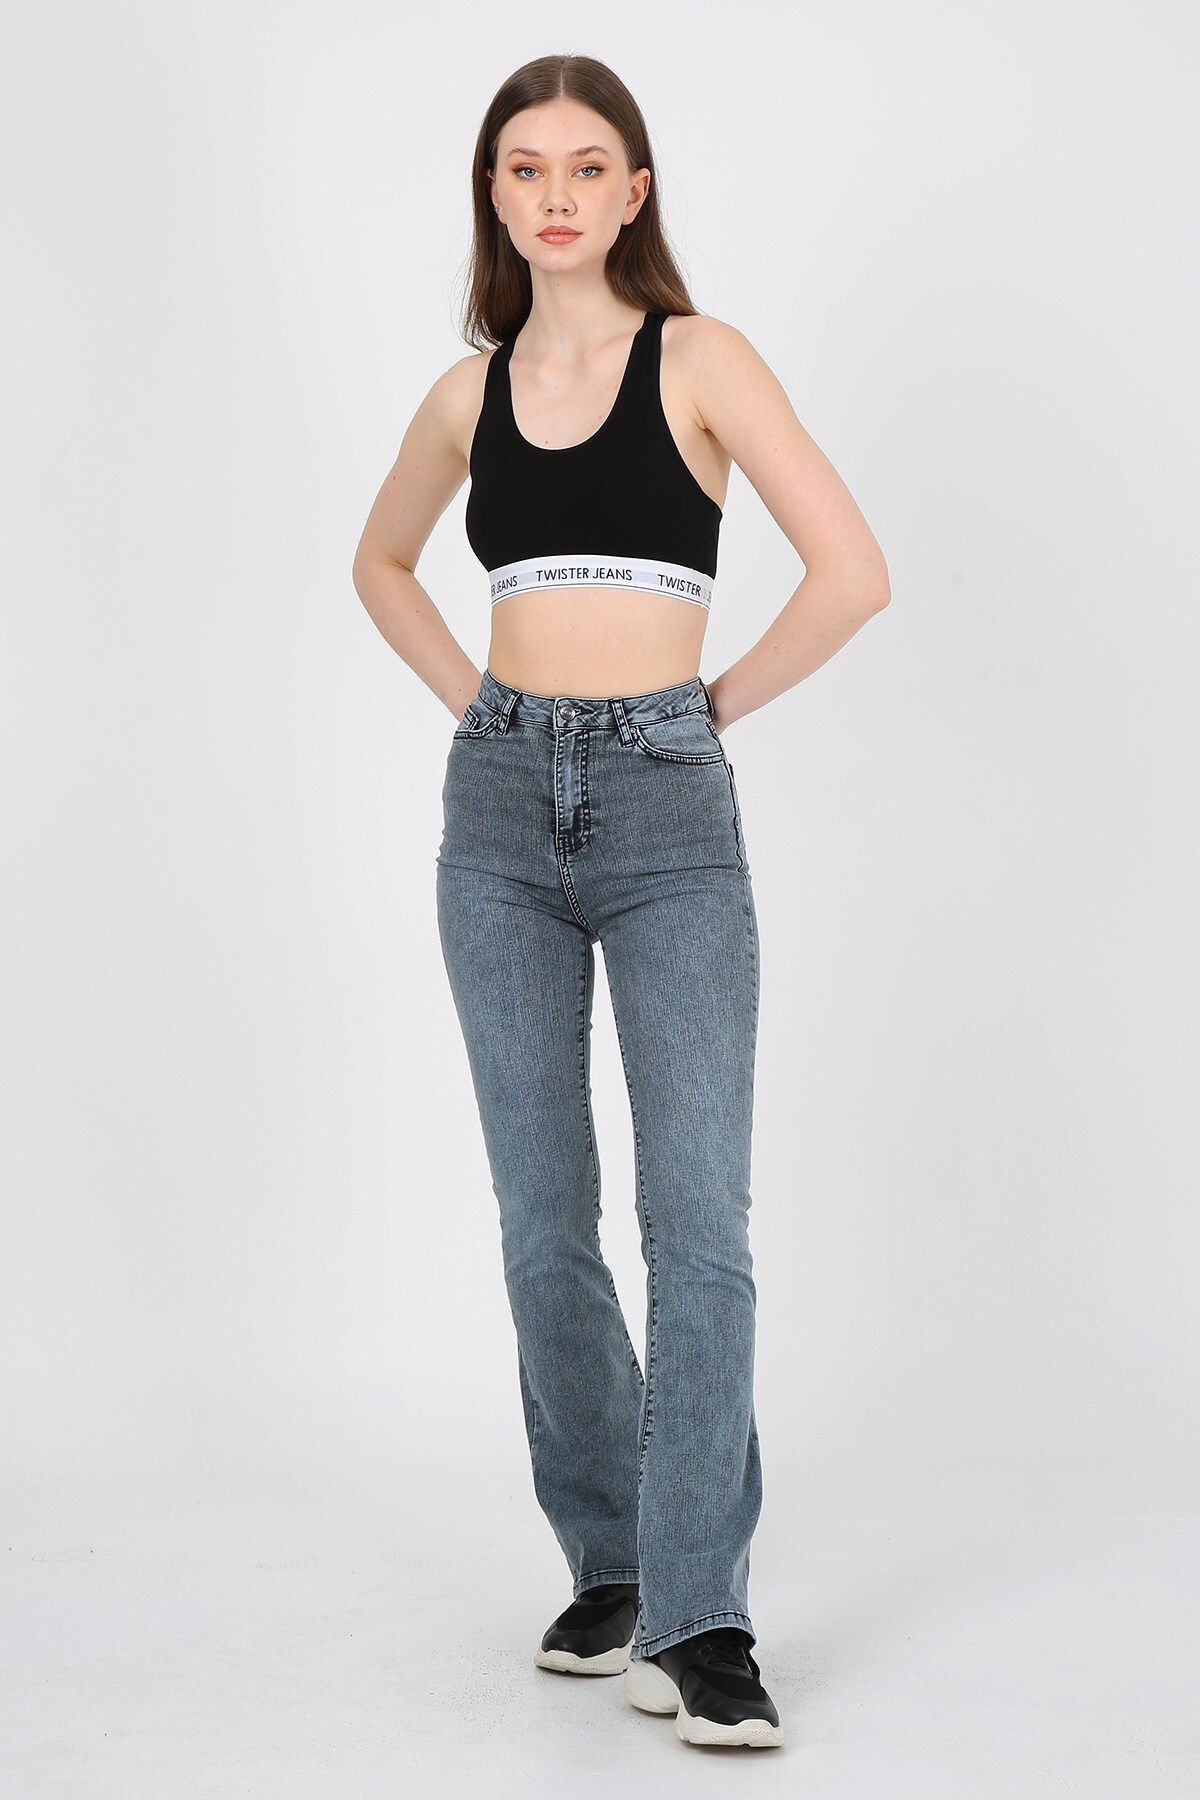 Twister Jeans Kadın Pantolon Olivia 9404-21 Light Snow